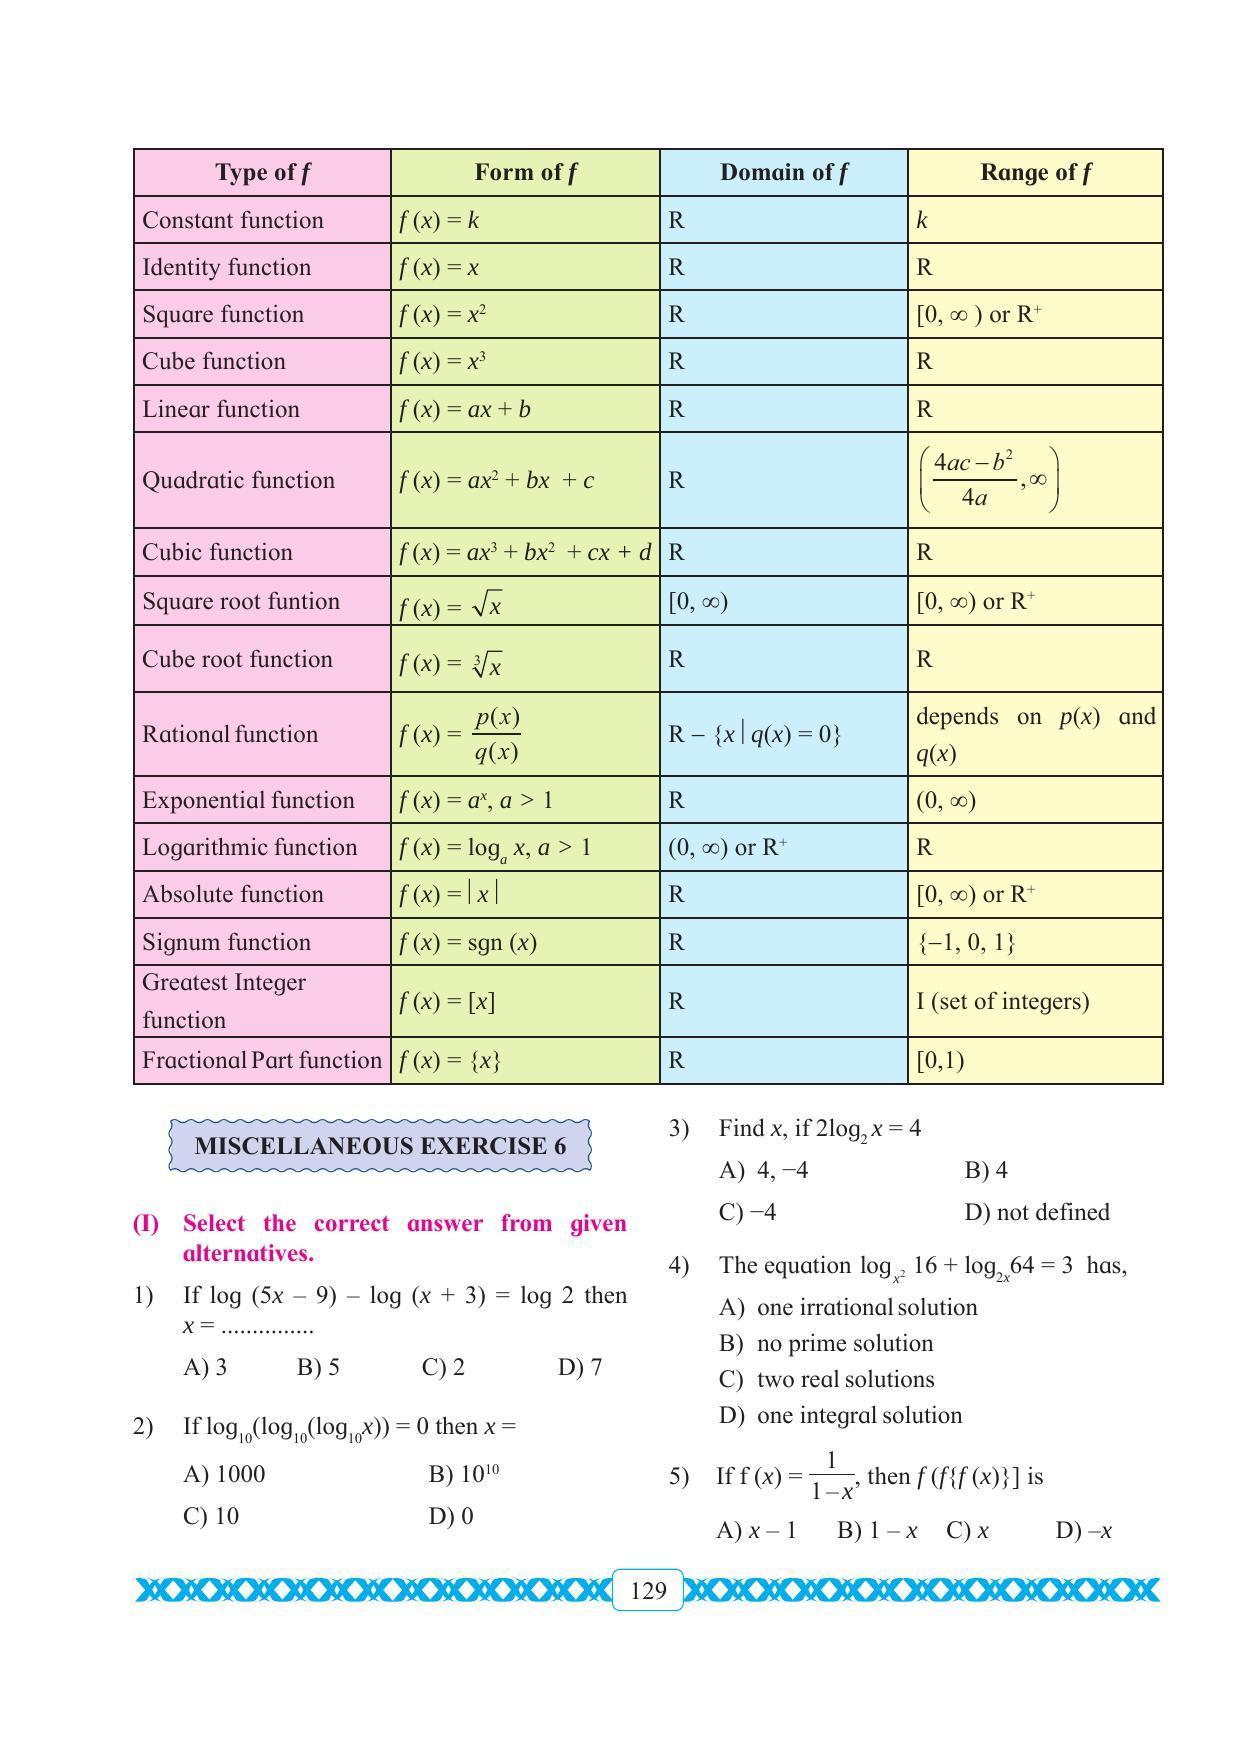 Maharashtra Board Class 11 Maths Textbook - Page 139